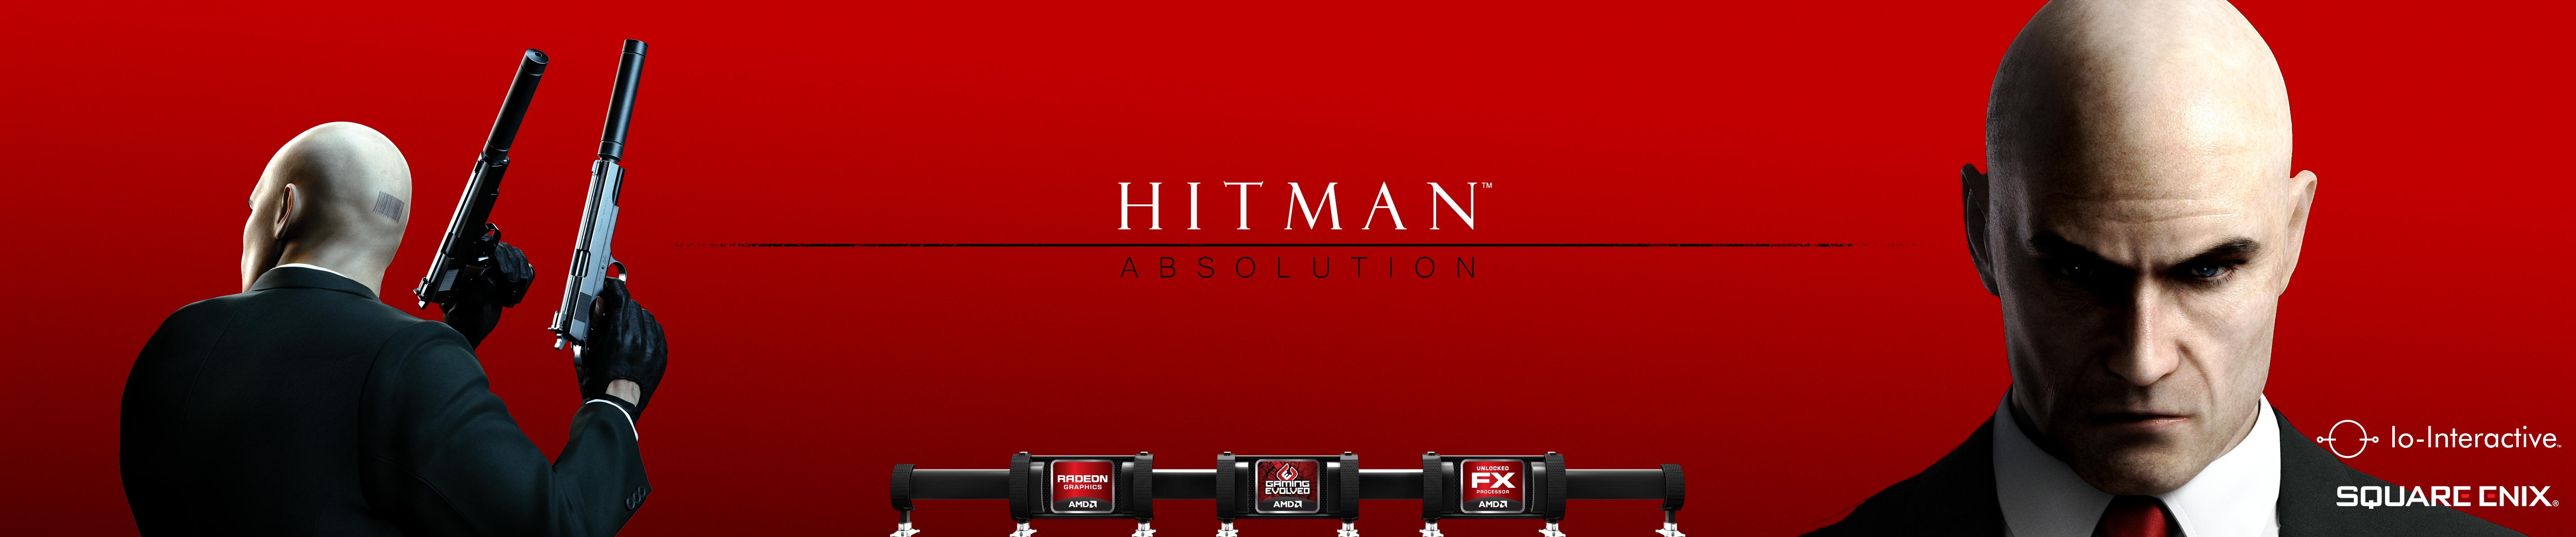 Hitman Absolution Black Box Crack Download